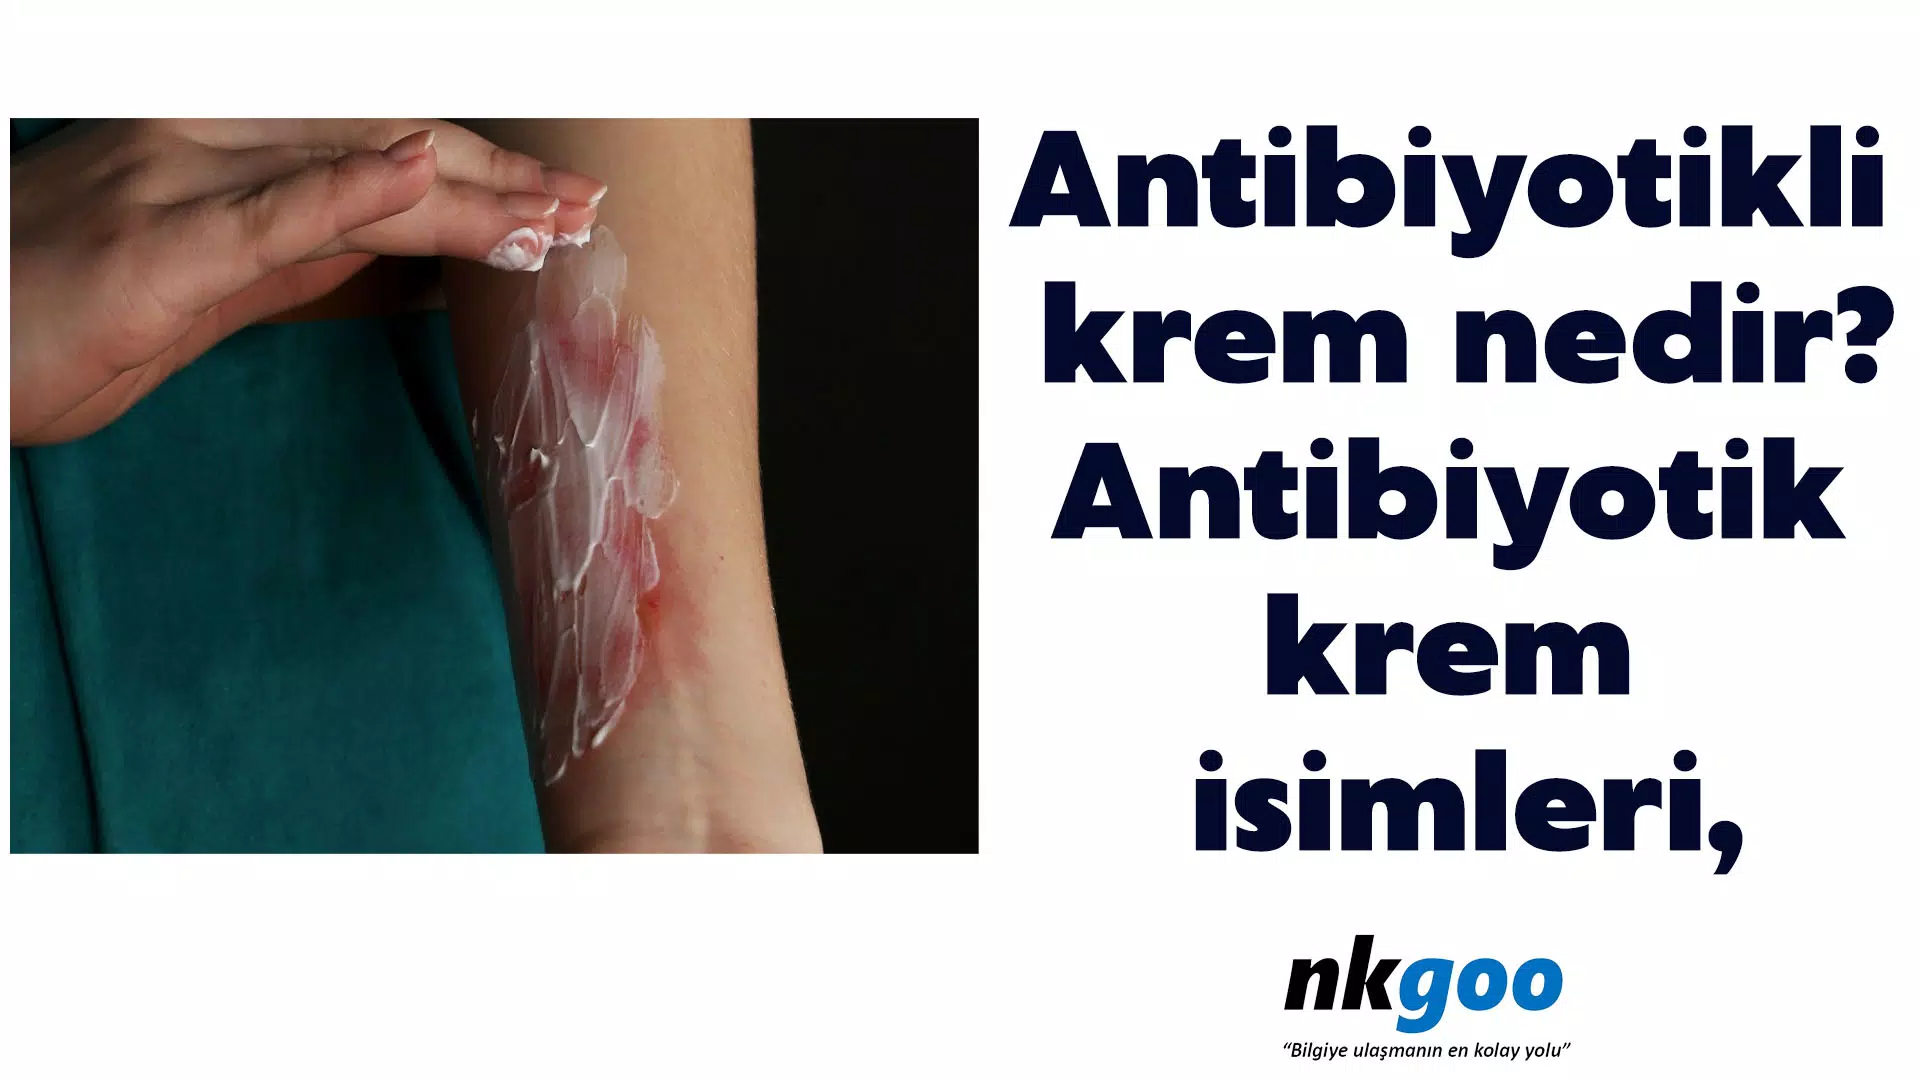 Antibiyotik krem isimleri, antibiyotikli krem nedir?